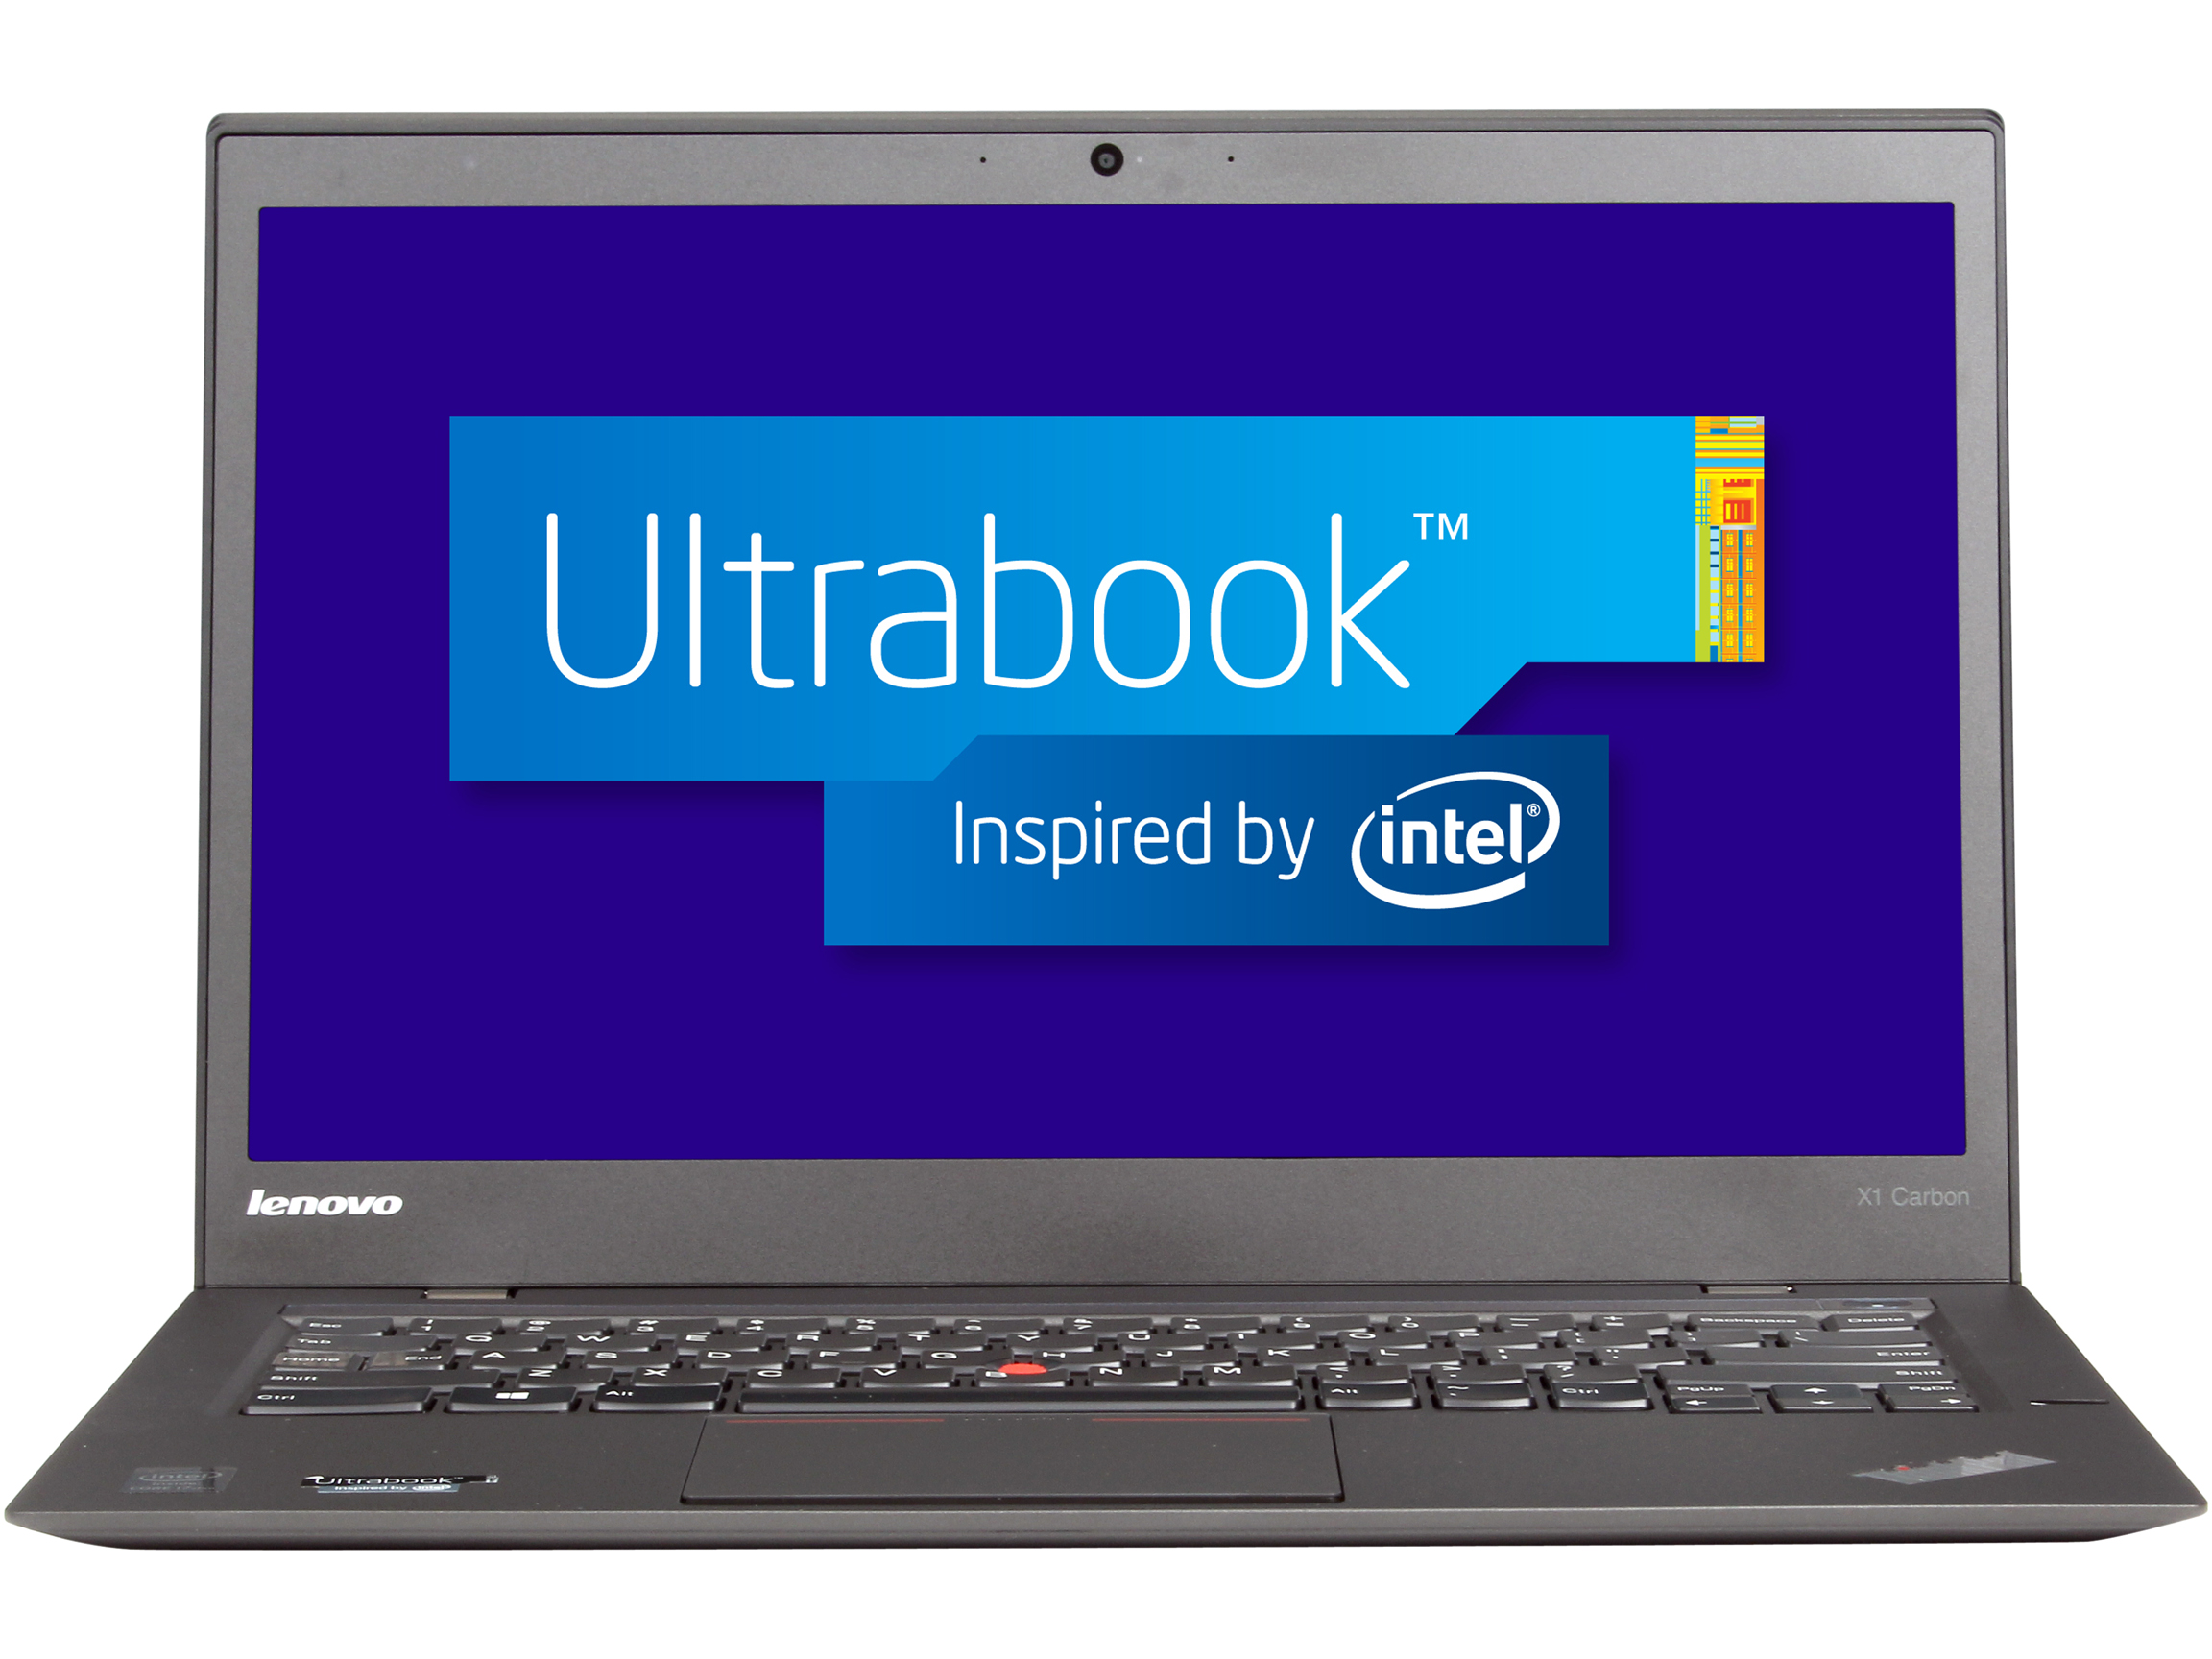 ThinkPad ThinkPad X1 Carbon Ultrabook Intel Core i7 4600U (2.10 GHz) 256 GB SSD Intel HD Graphics 4400 Shared memory 14" Windows 7 Professional Upgradable to Windows 8.1 Pro 64 Bit